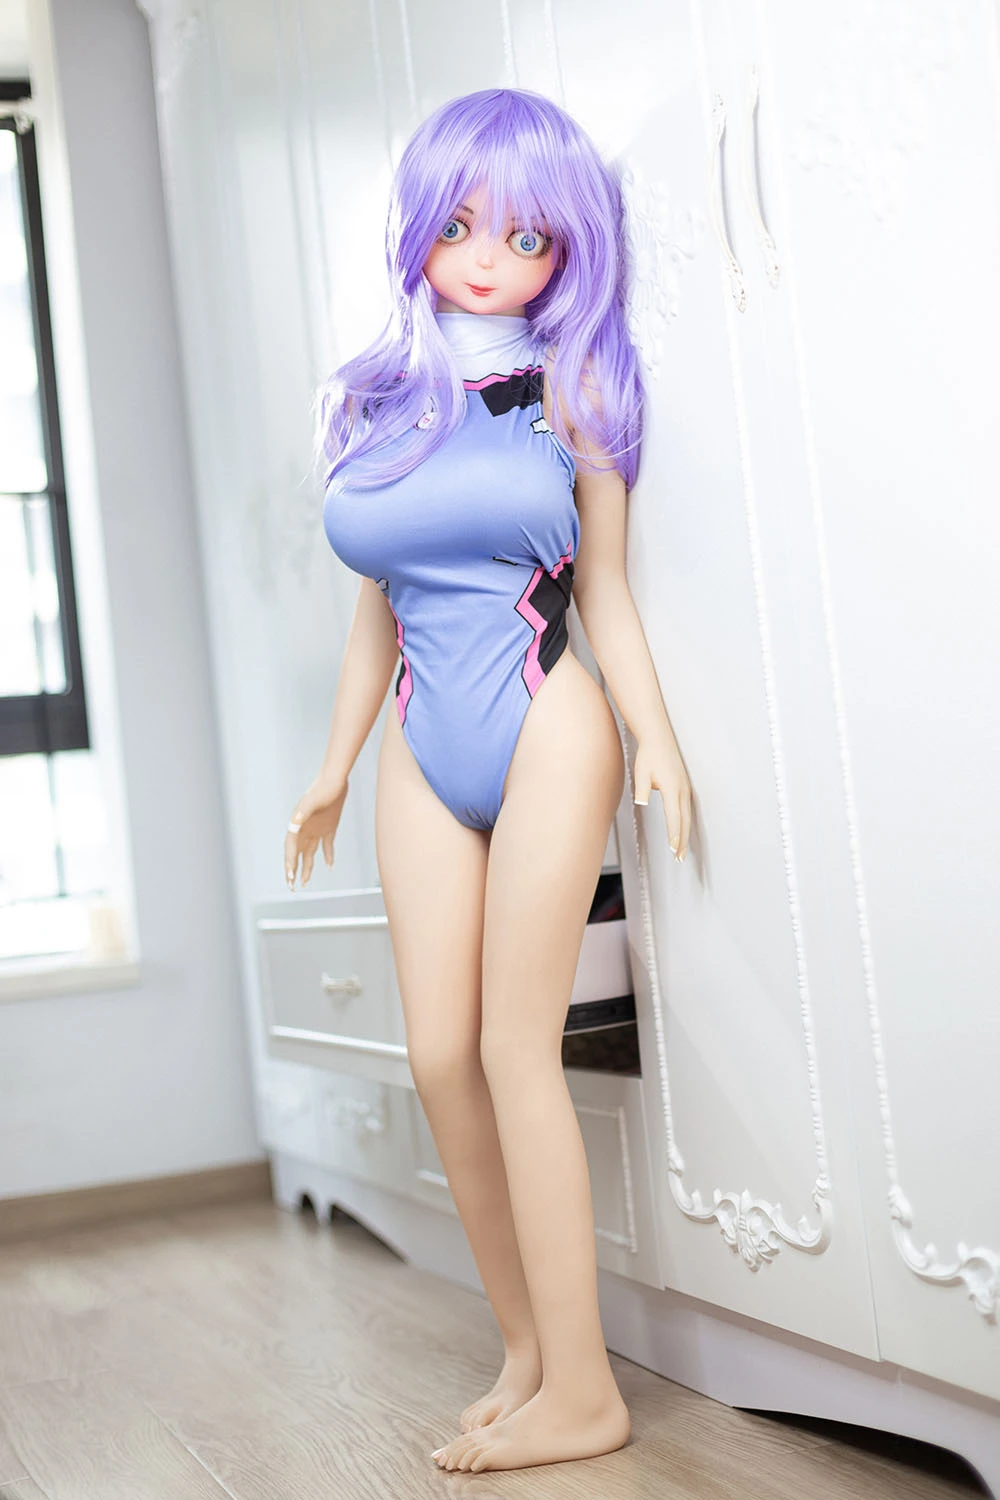 Purple Hair erotic doll